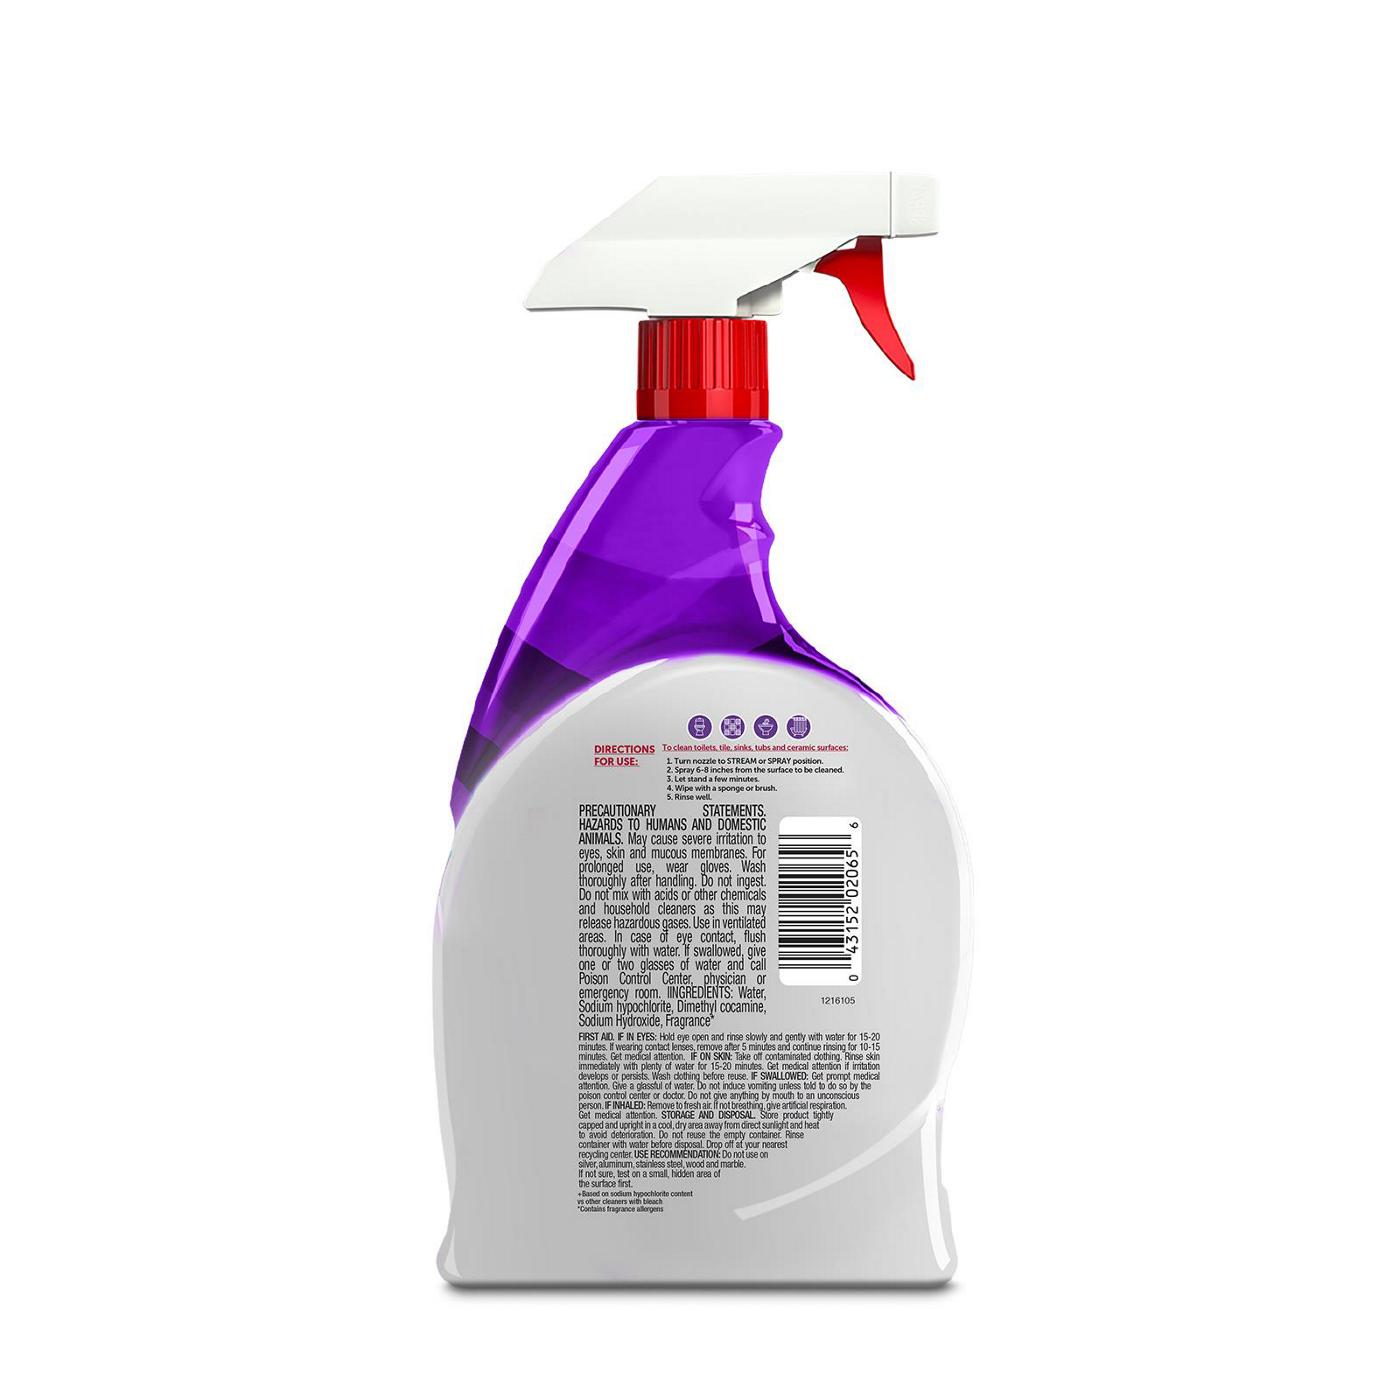 Cloralen Bathroom Cleaner with Bleach Spray - Lavender Scent